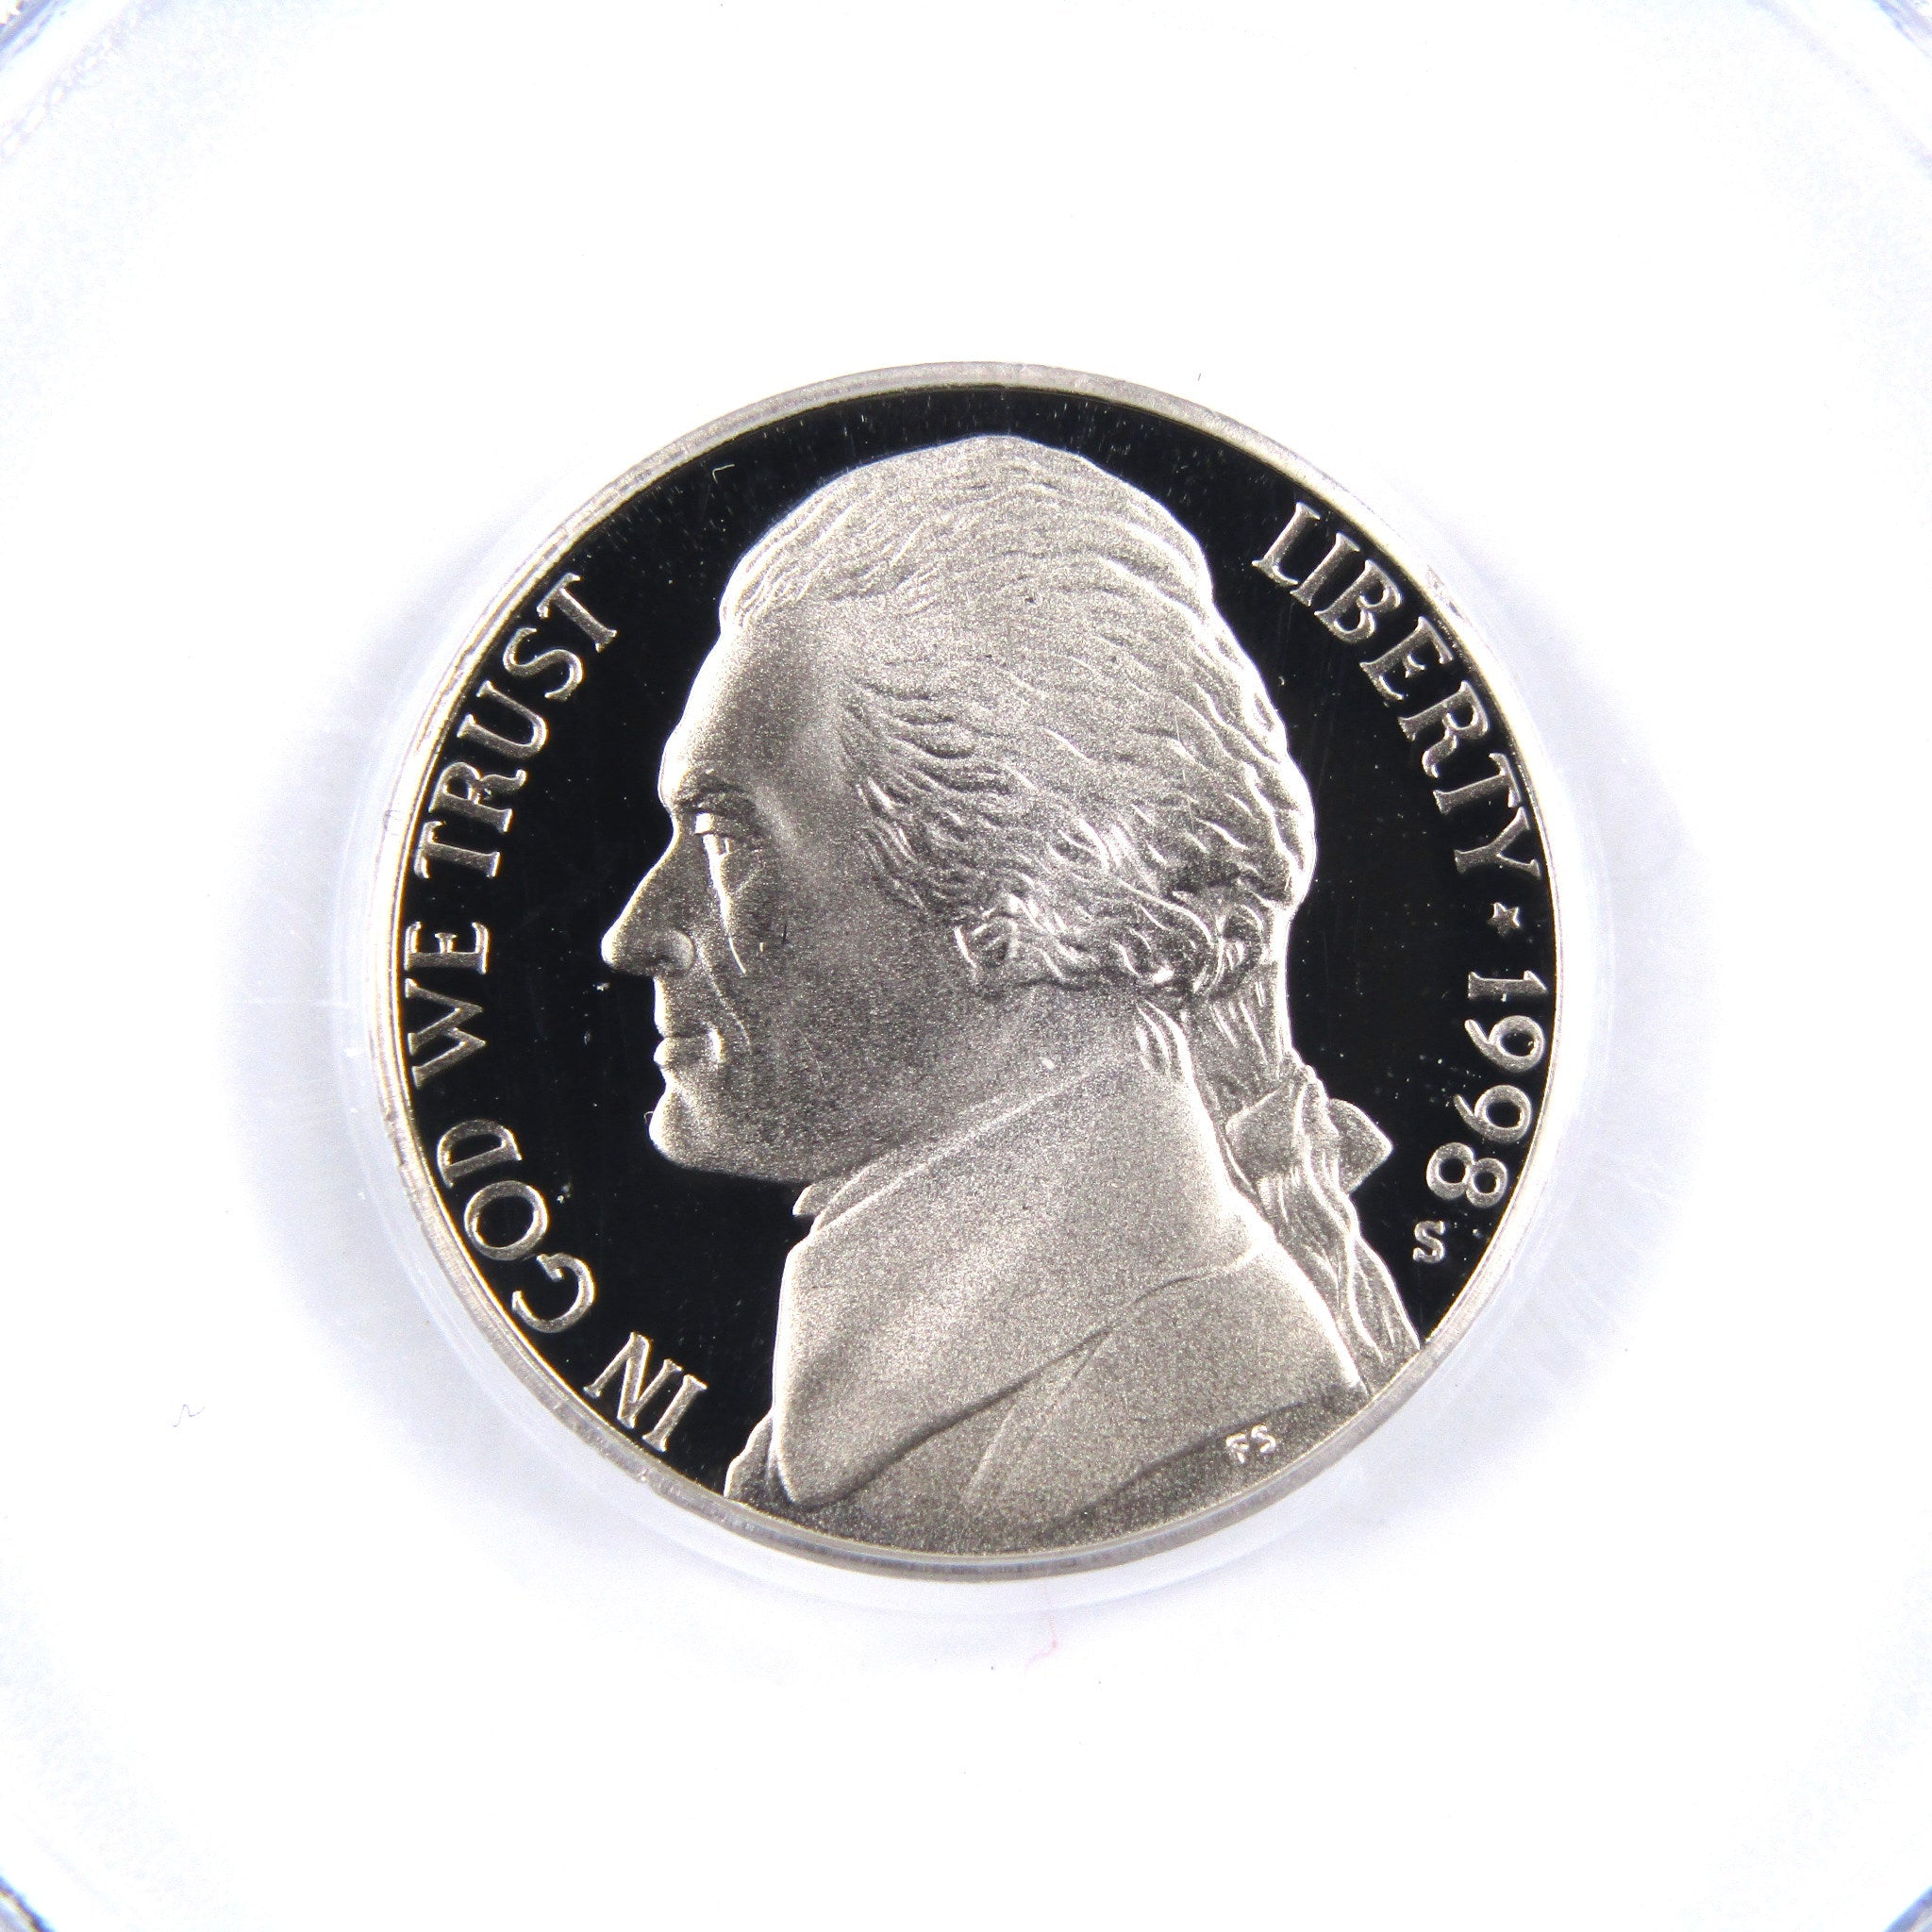 1998 S Jefferson Nickel 5 Cent Piece PR 69 DCAM PCGS Proof SKU:CPC2365